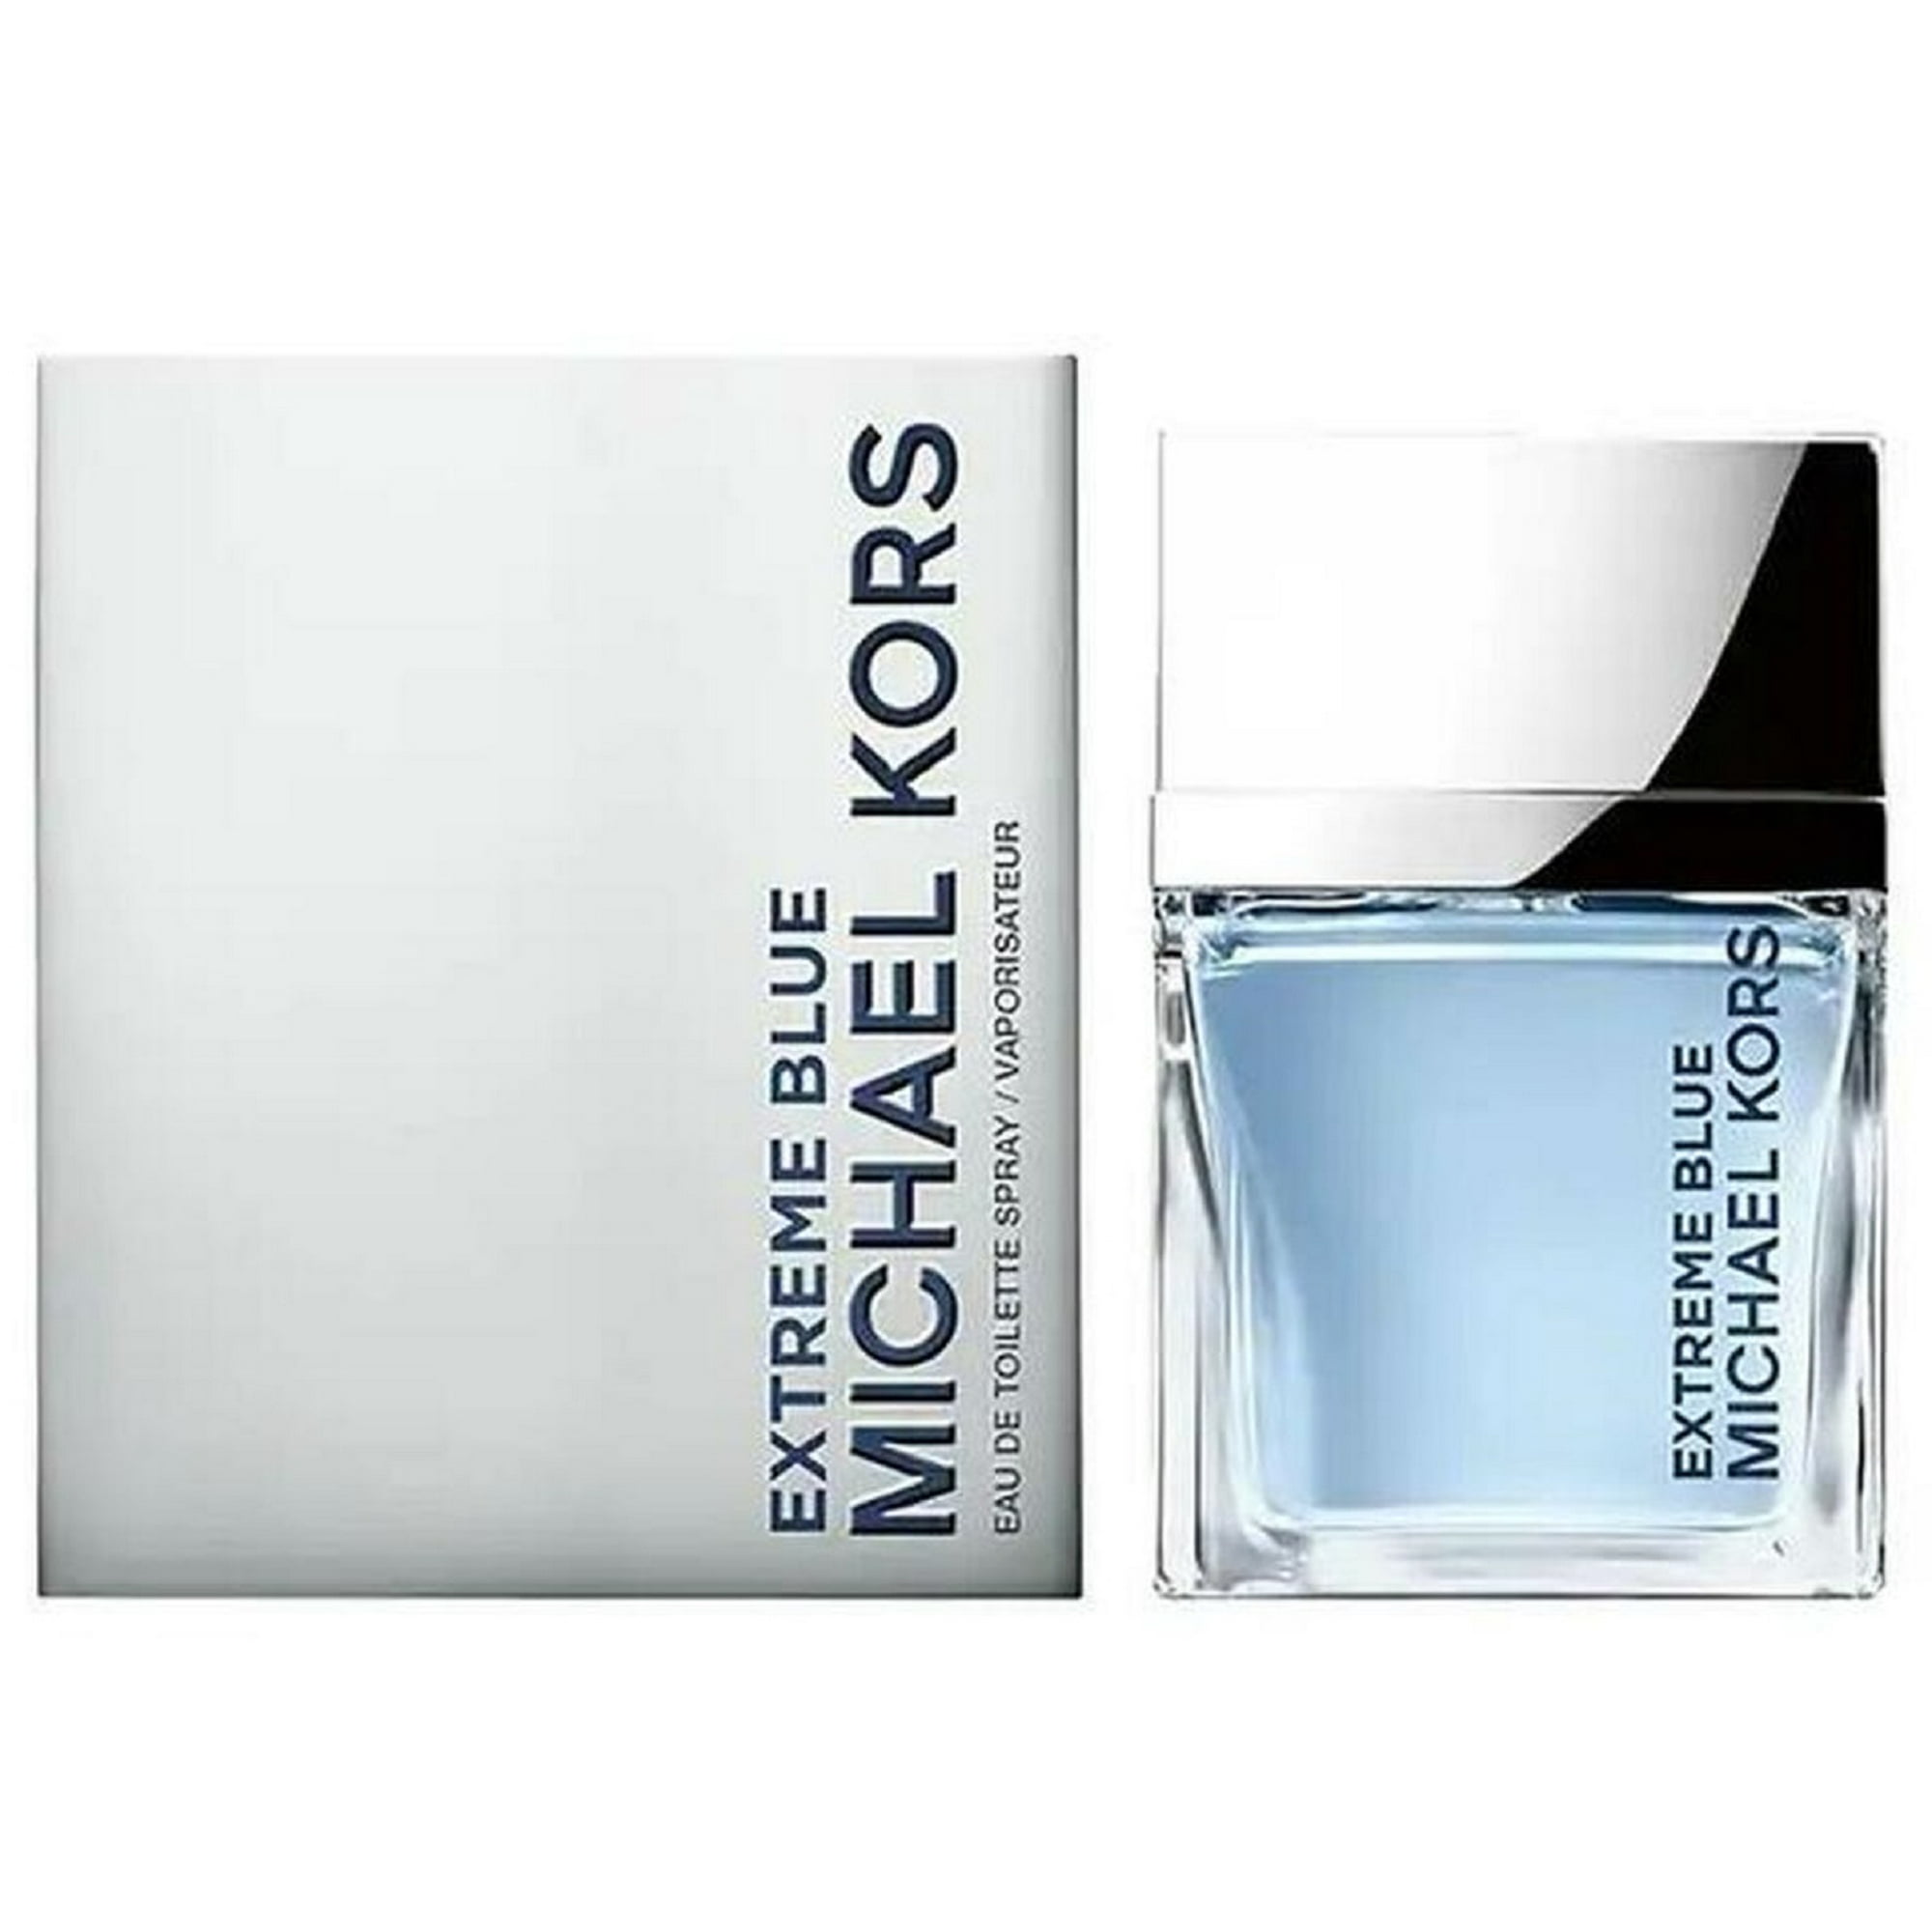 Michael Kors Extreme Blue EDT Spray Men 3.4 oz  